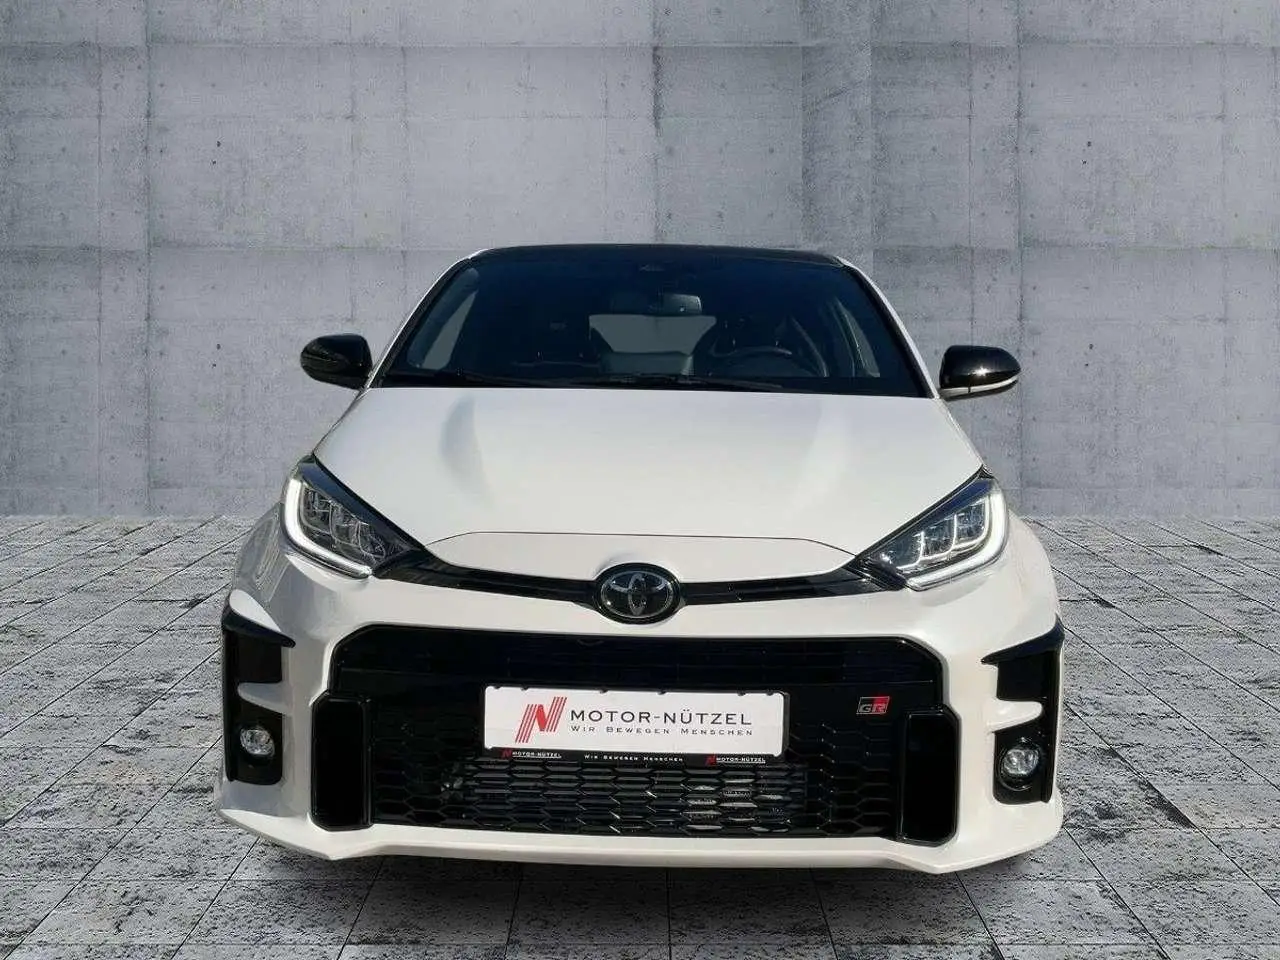 Photo 1 : Toyota Yaris 2020 Petrol